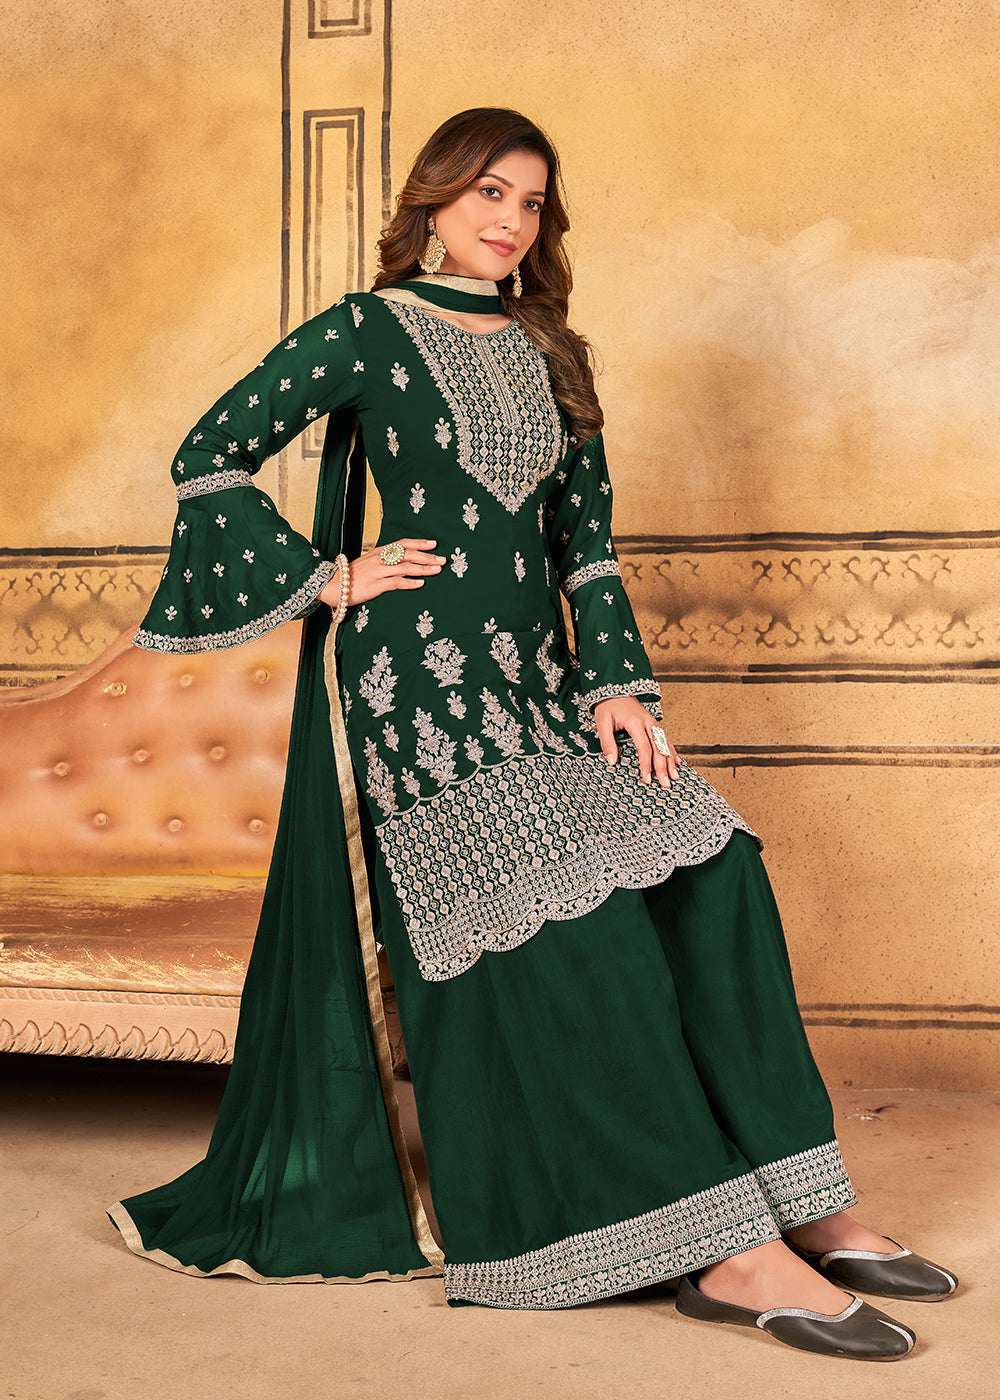 Buy Now Traditional Wedding Green Georgette Palazzo Salwar Kurta Online in USA, UK, Canada & Worldwide at Empress Clothing.